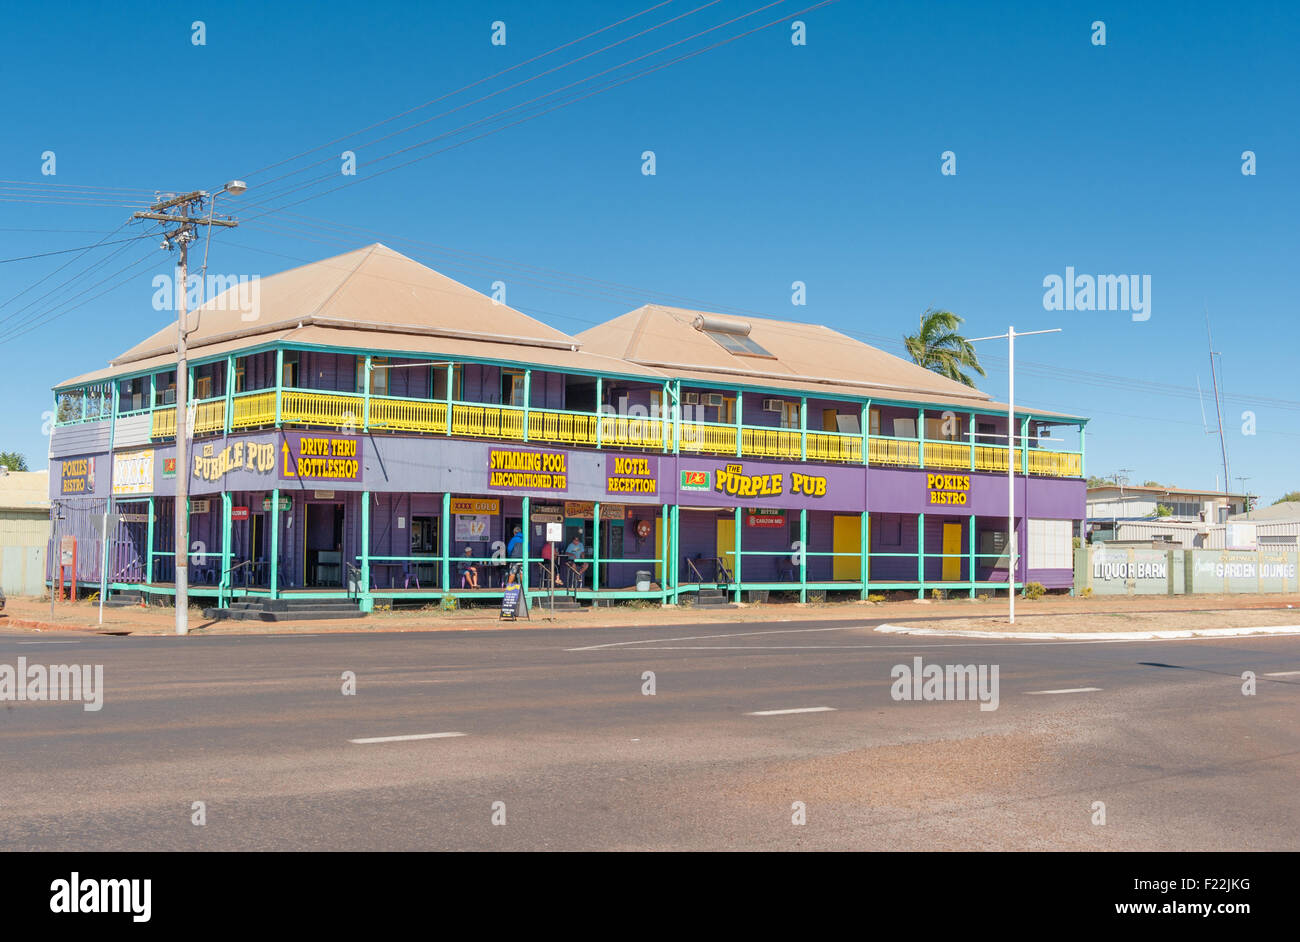 The historic 'Purple Pub', a landmark building of Normanton, Queensland Stock Photo